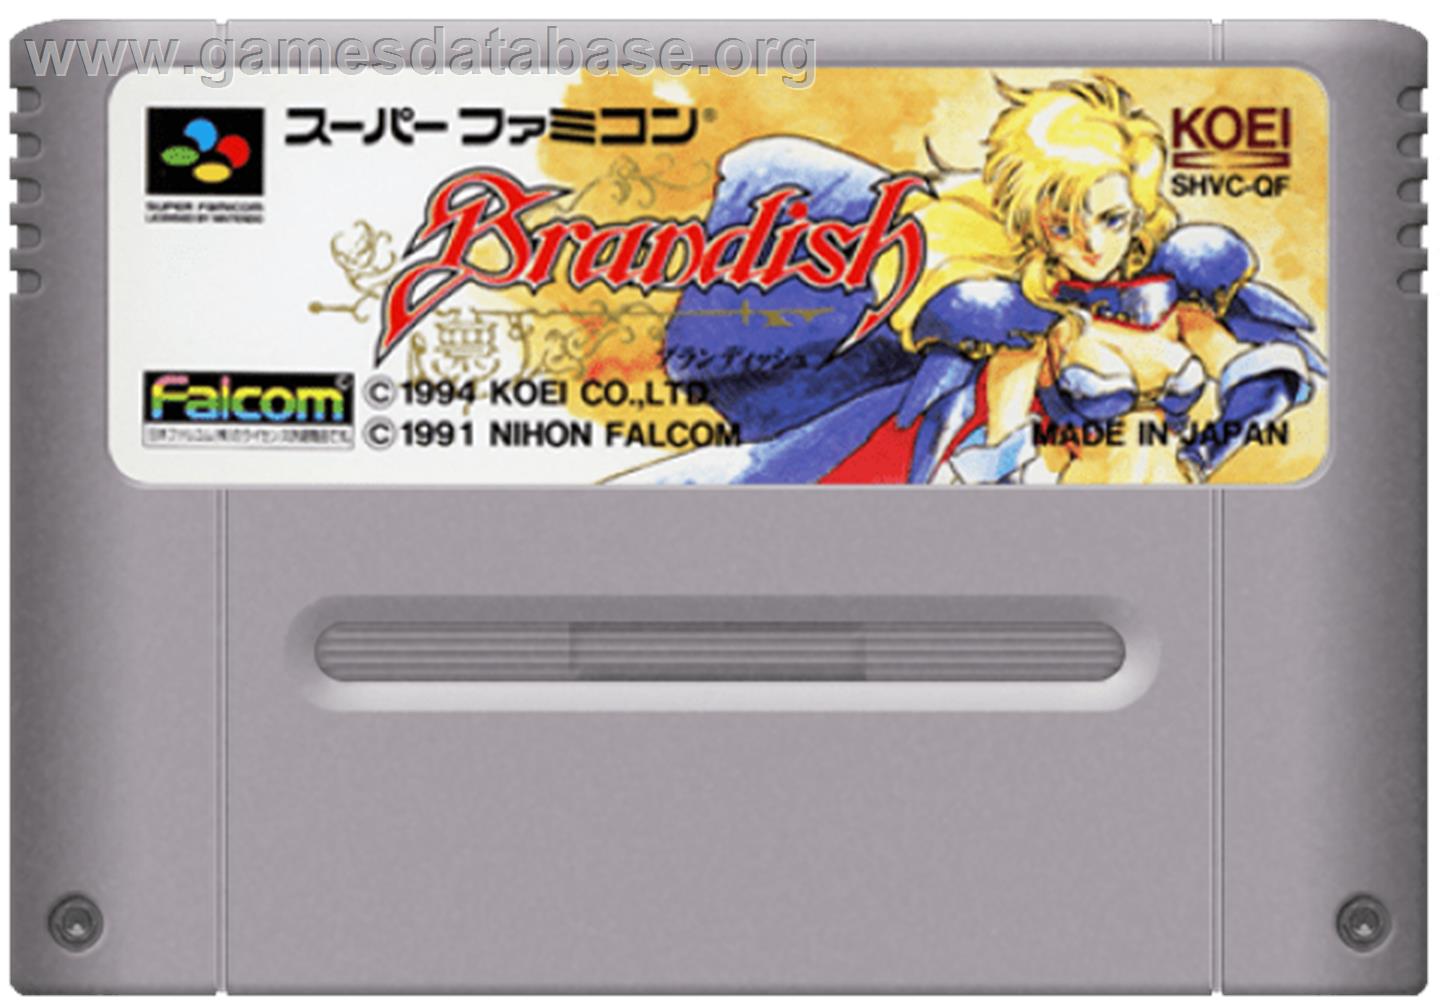 Brandish - Nintendo SNES - Artwork - Cartridge